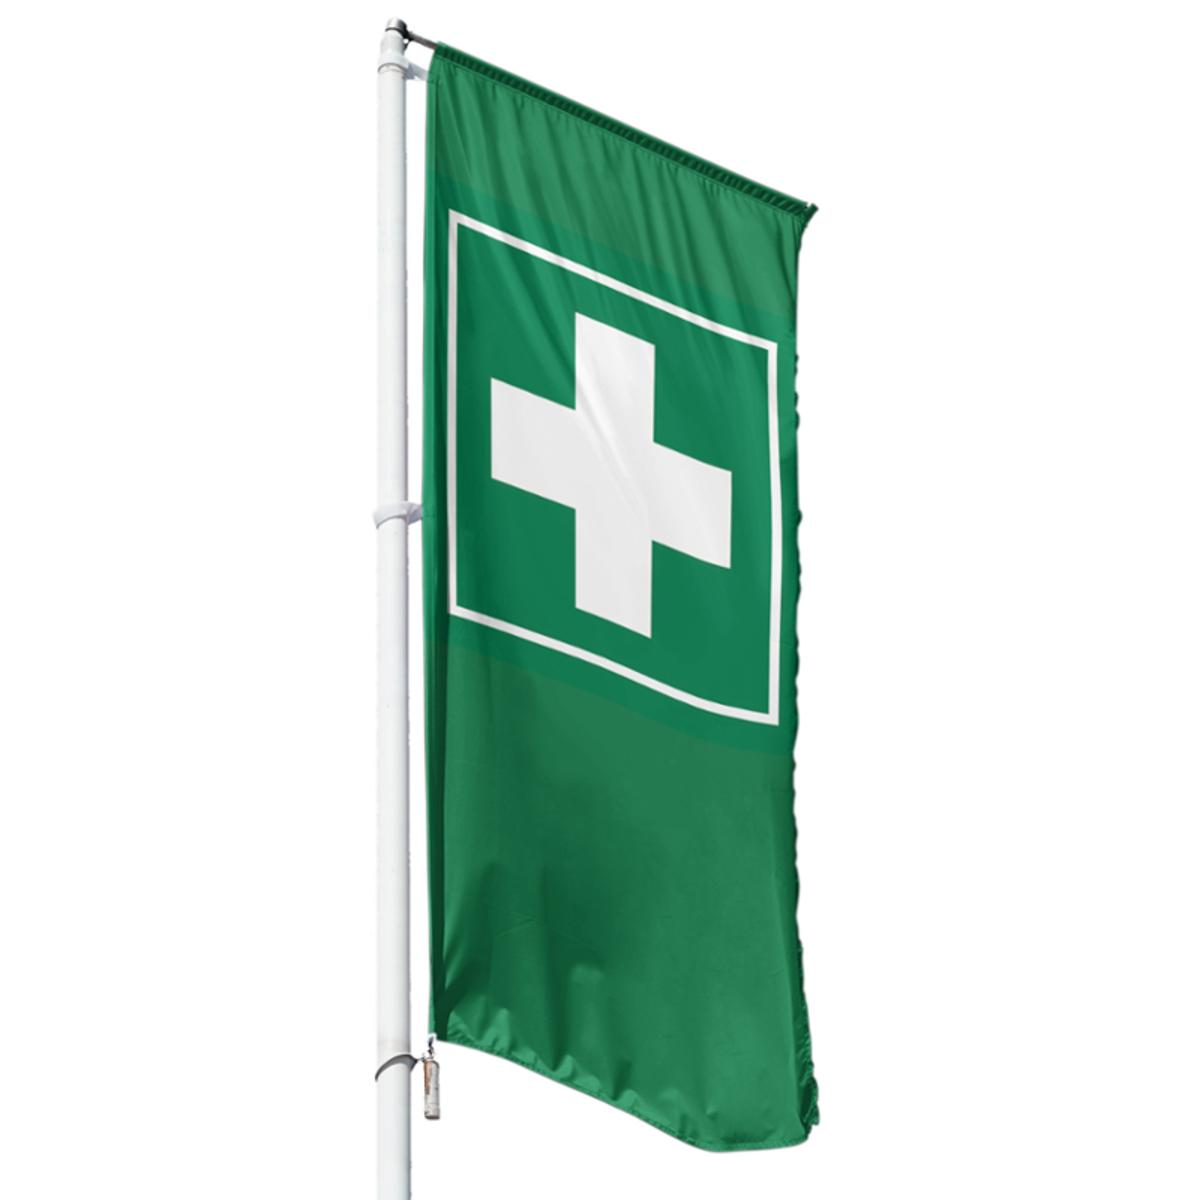 Fahne Erste Hilfe, grün - Wunschgröße